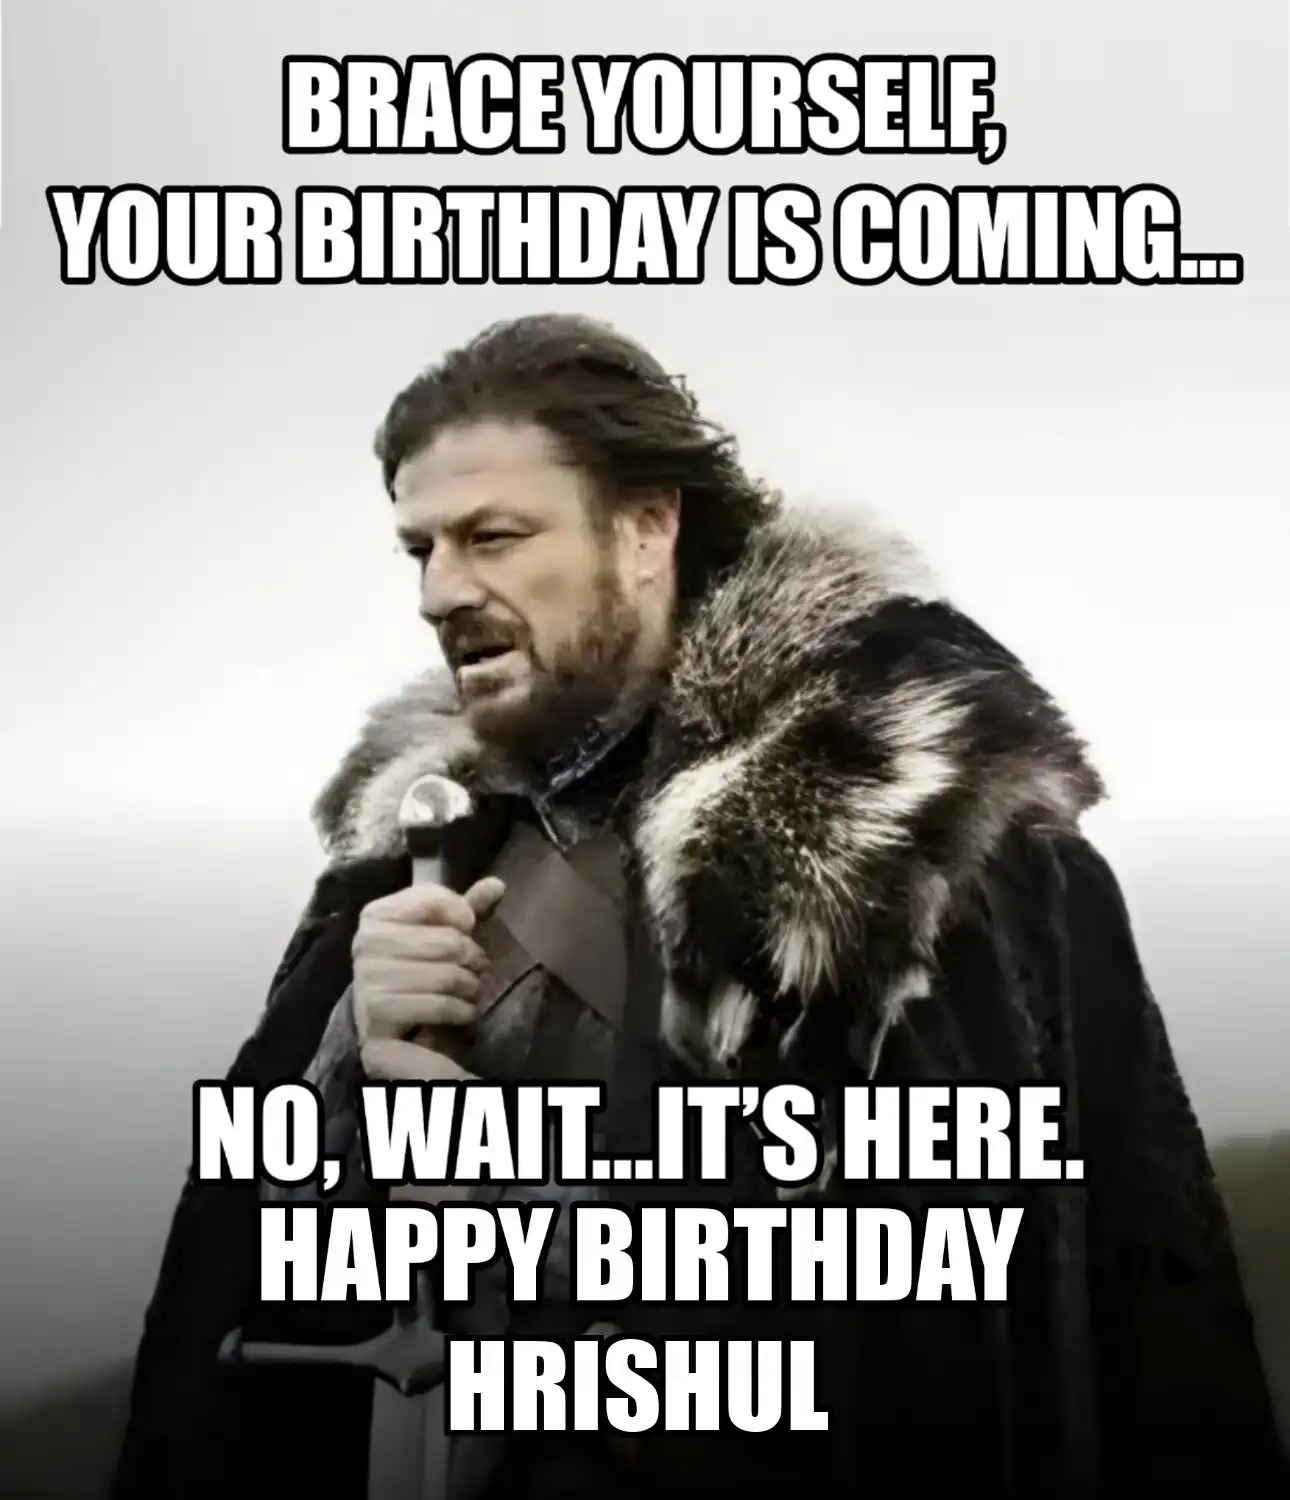 Happy Birthday Hrishul Brace Yourself Your Birthday Is Coming Meme